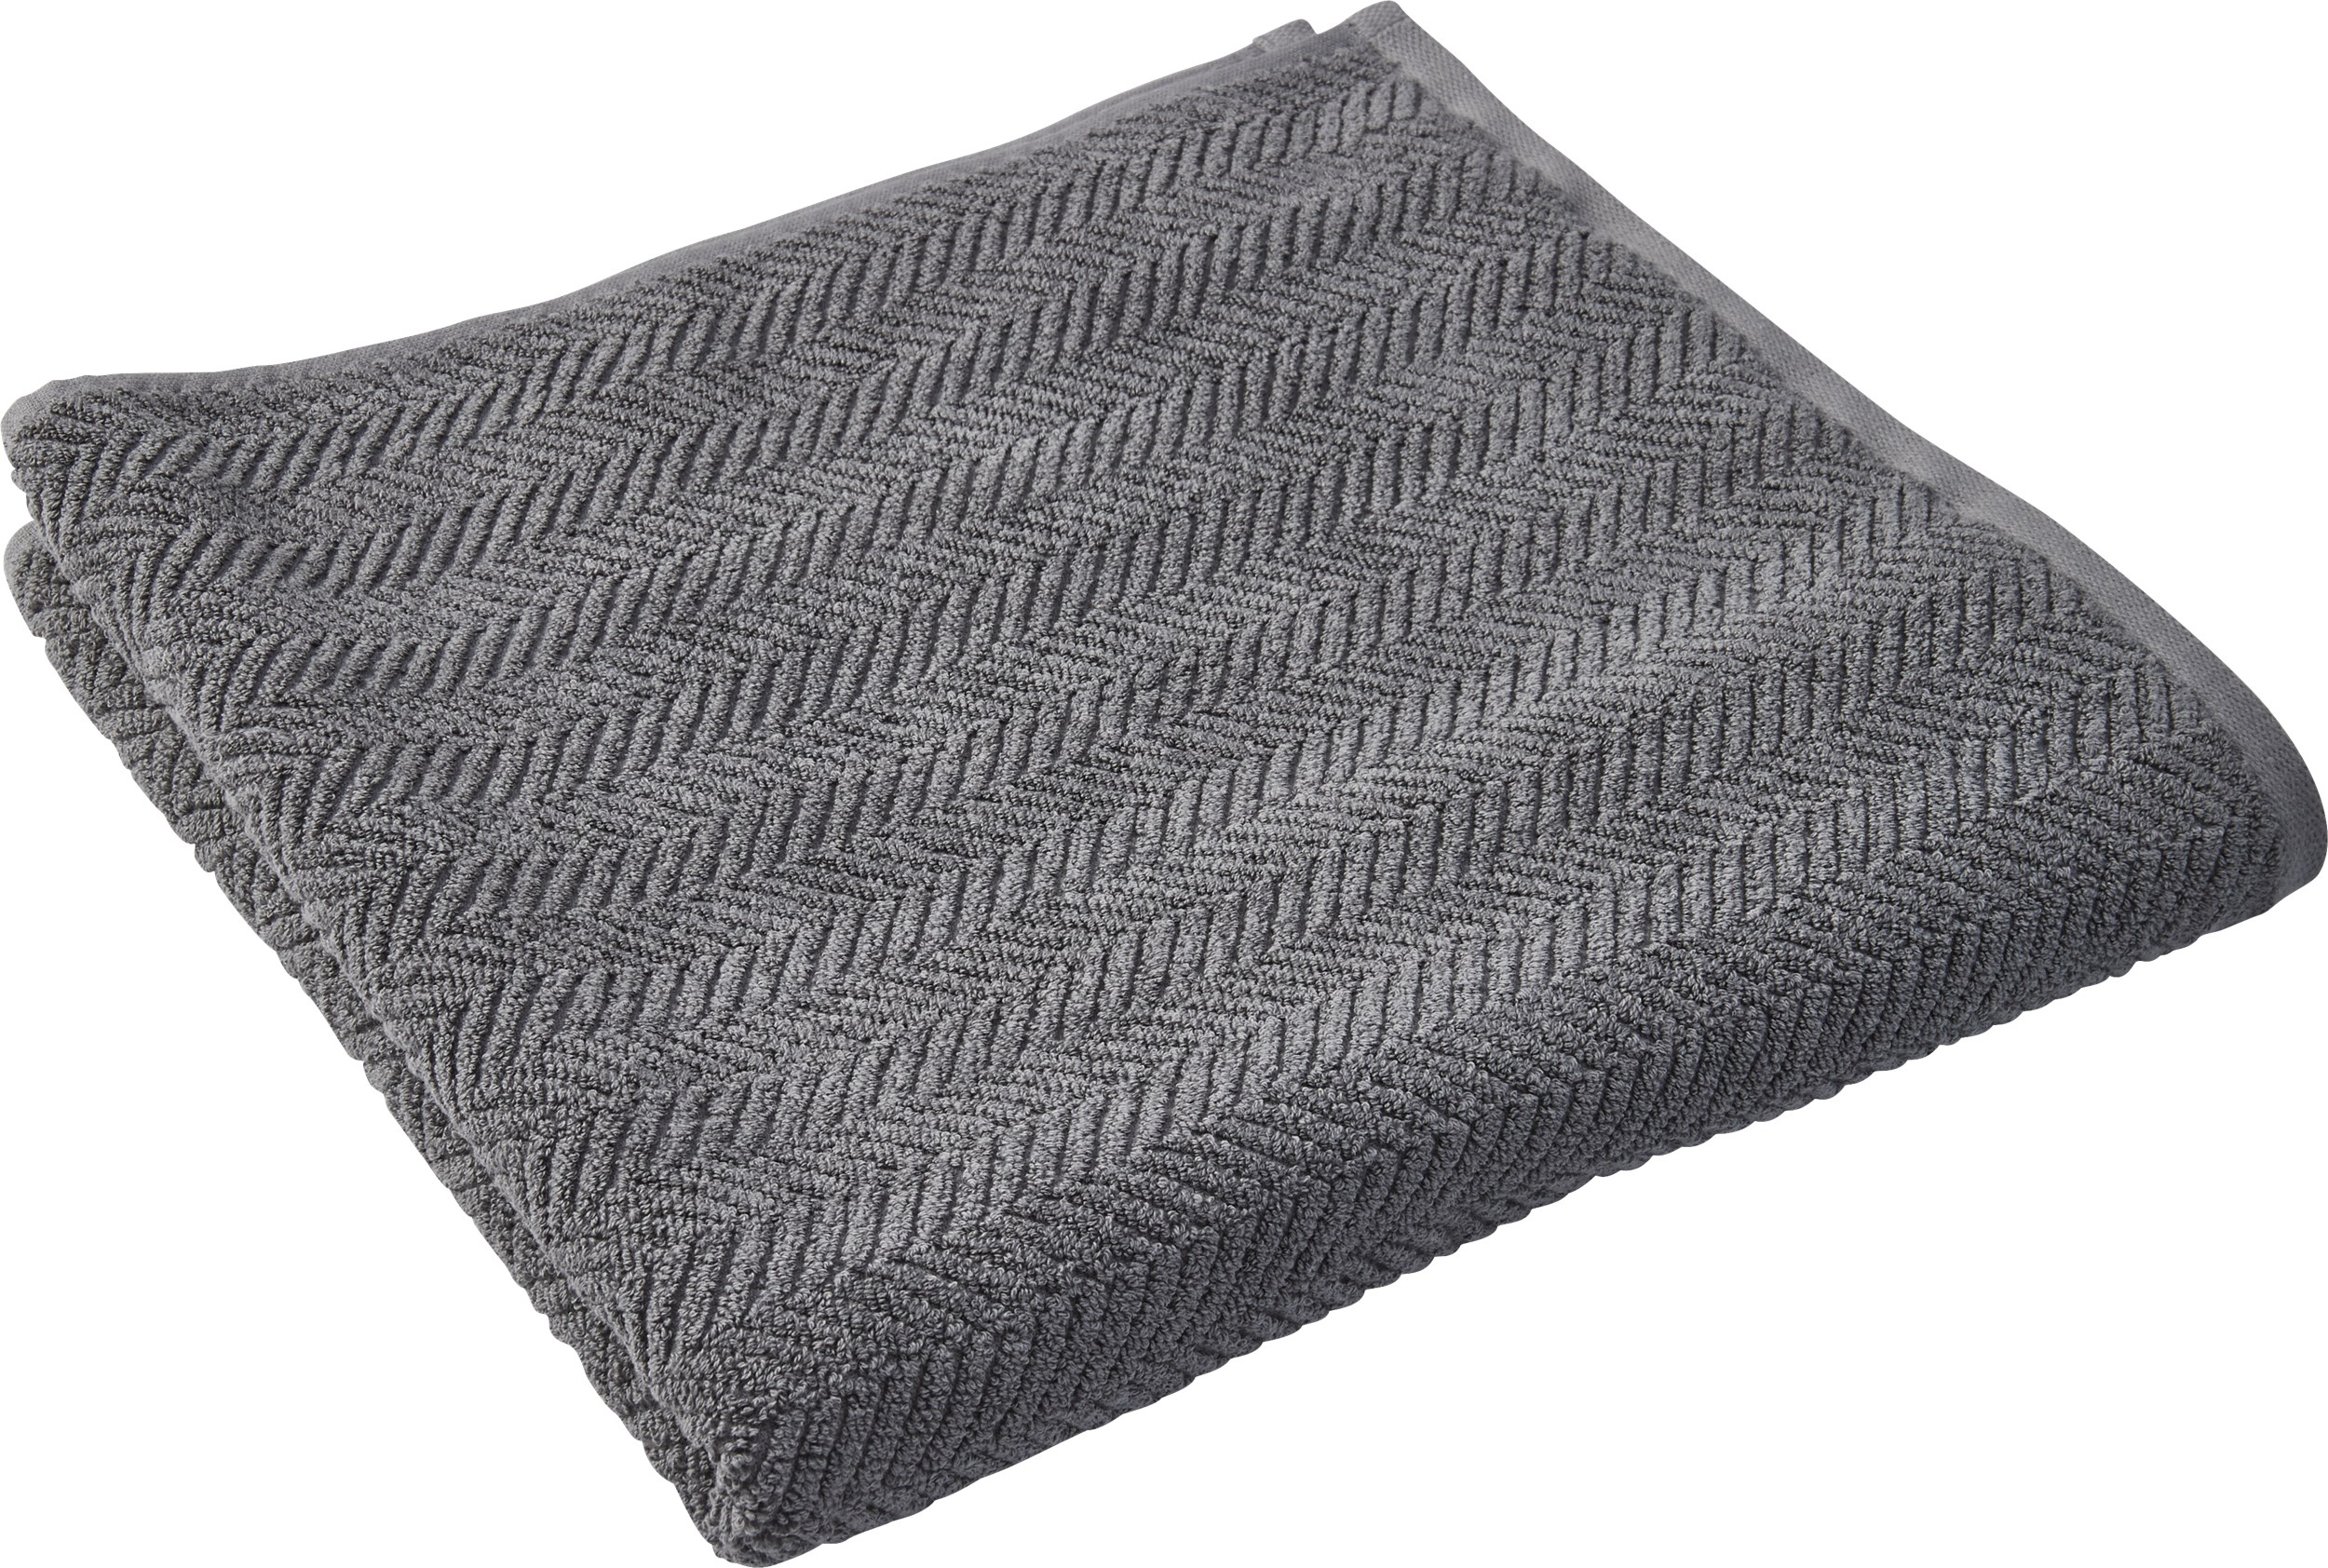 Visby Håndklæde 70 x 140 cm - Mørkegrå bomuld og sildebensmønster